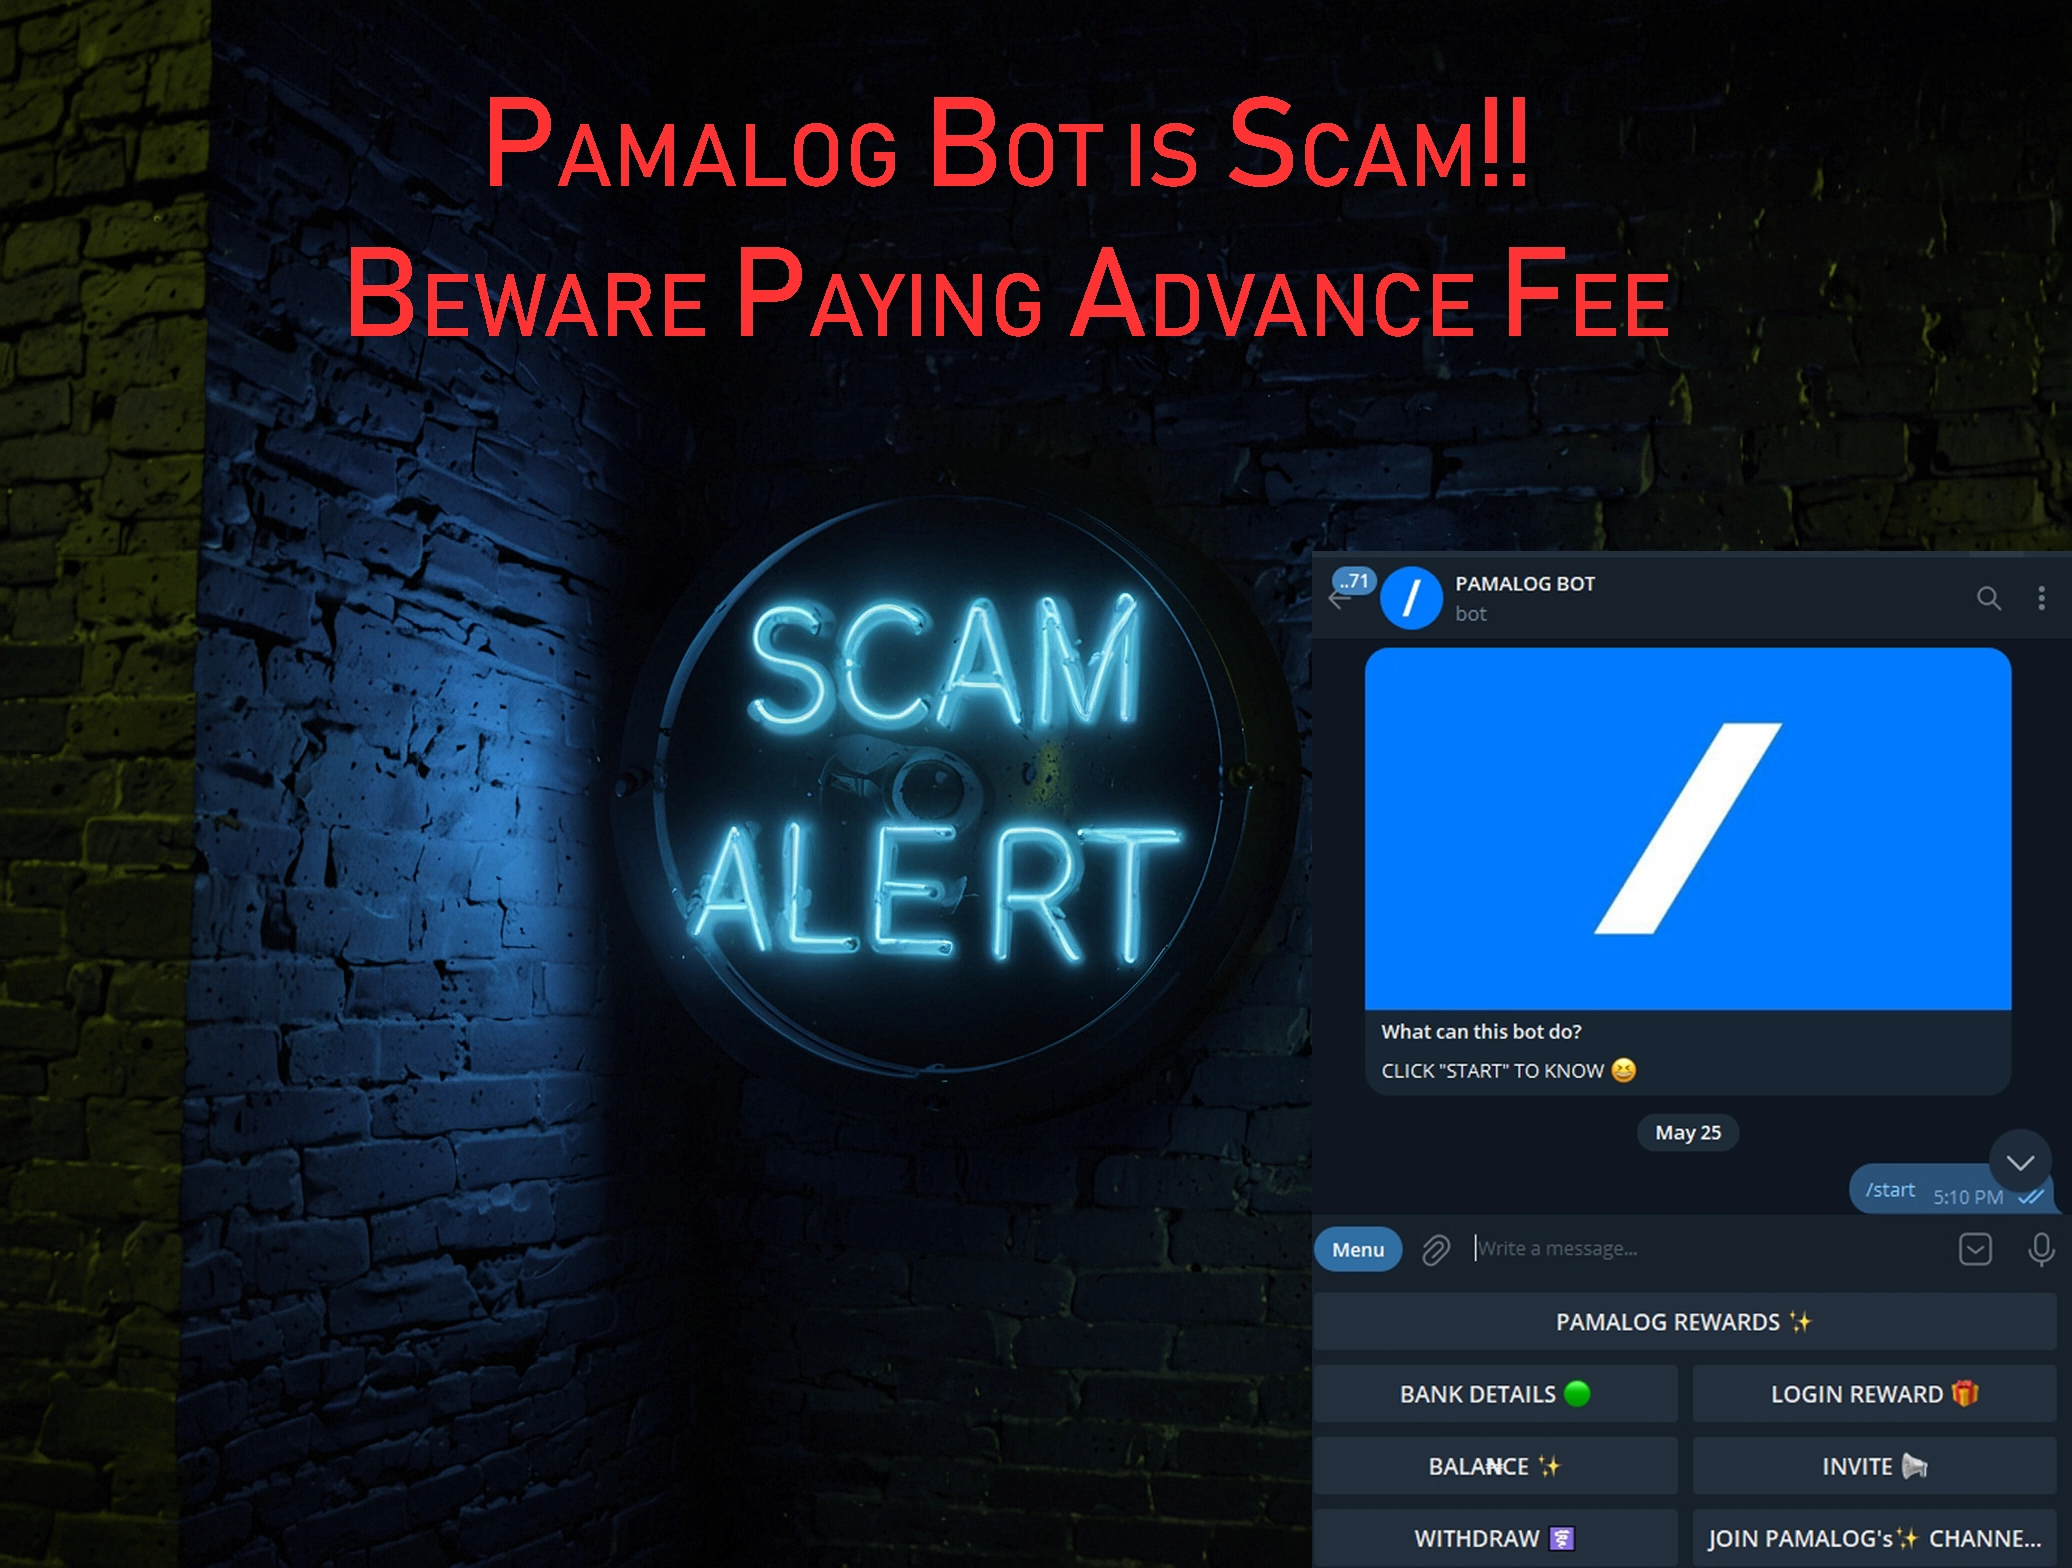 Pamalog Bot Exsposed: Easy Money or Scam?